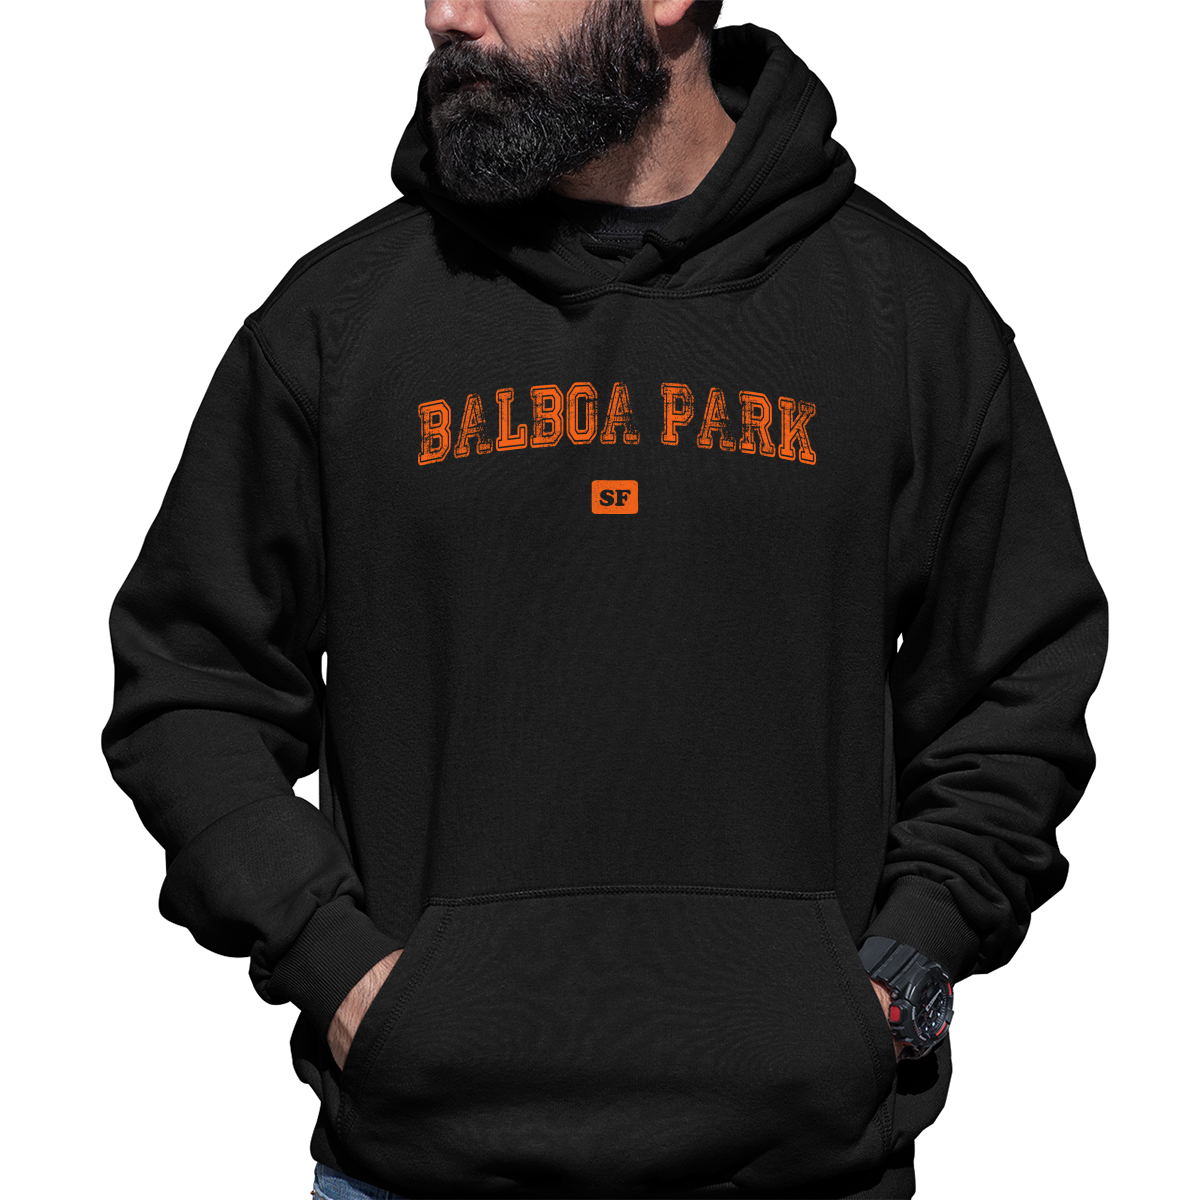 Balboa Park Sf Represent Unisex Hoodie | Black